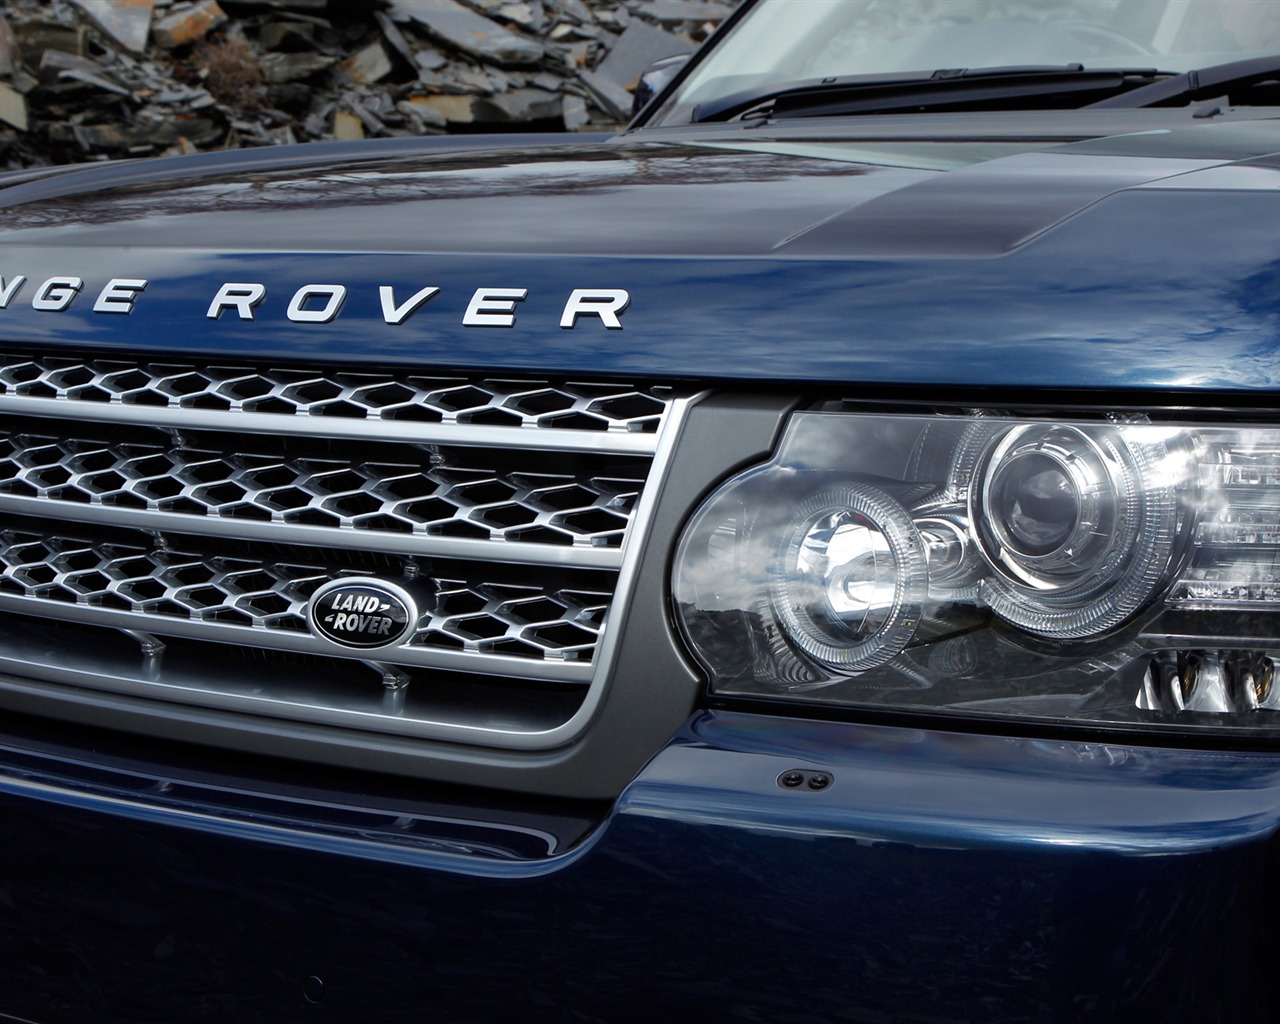 Land Rover Range Rover - 2011 路虎17 - 1280x1024